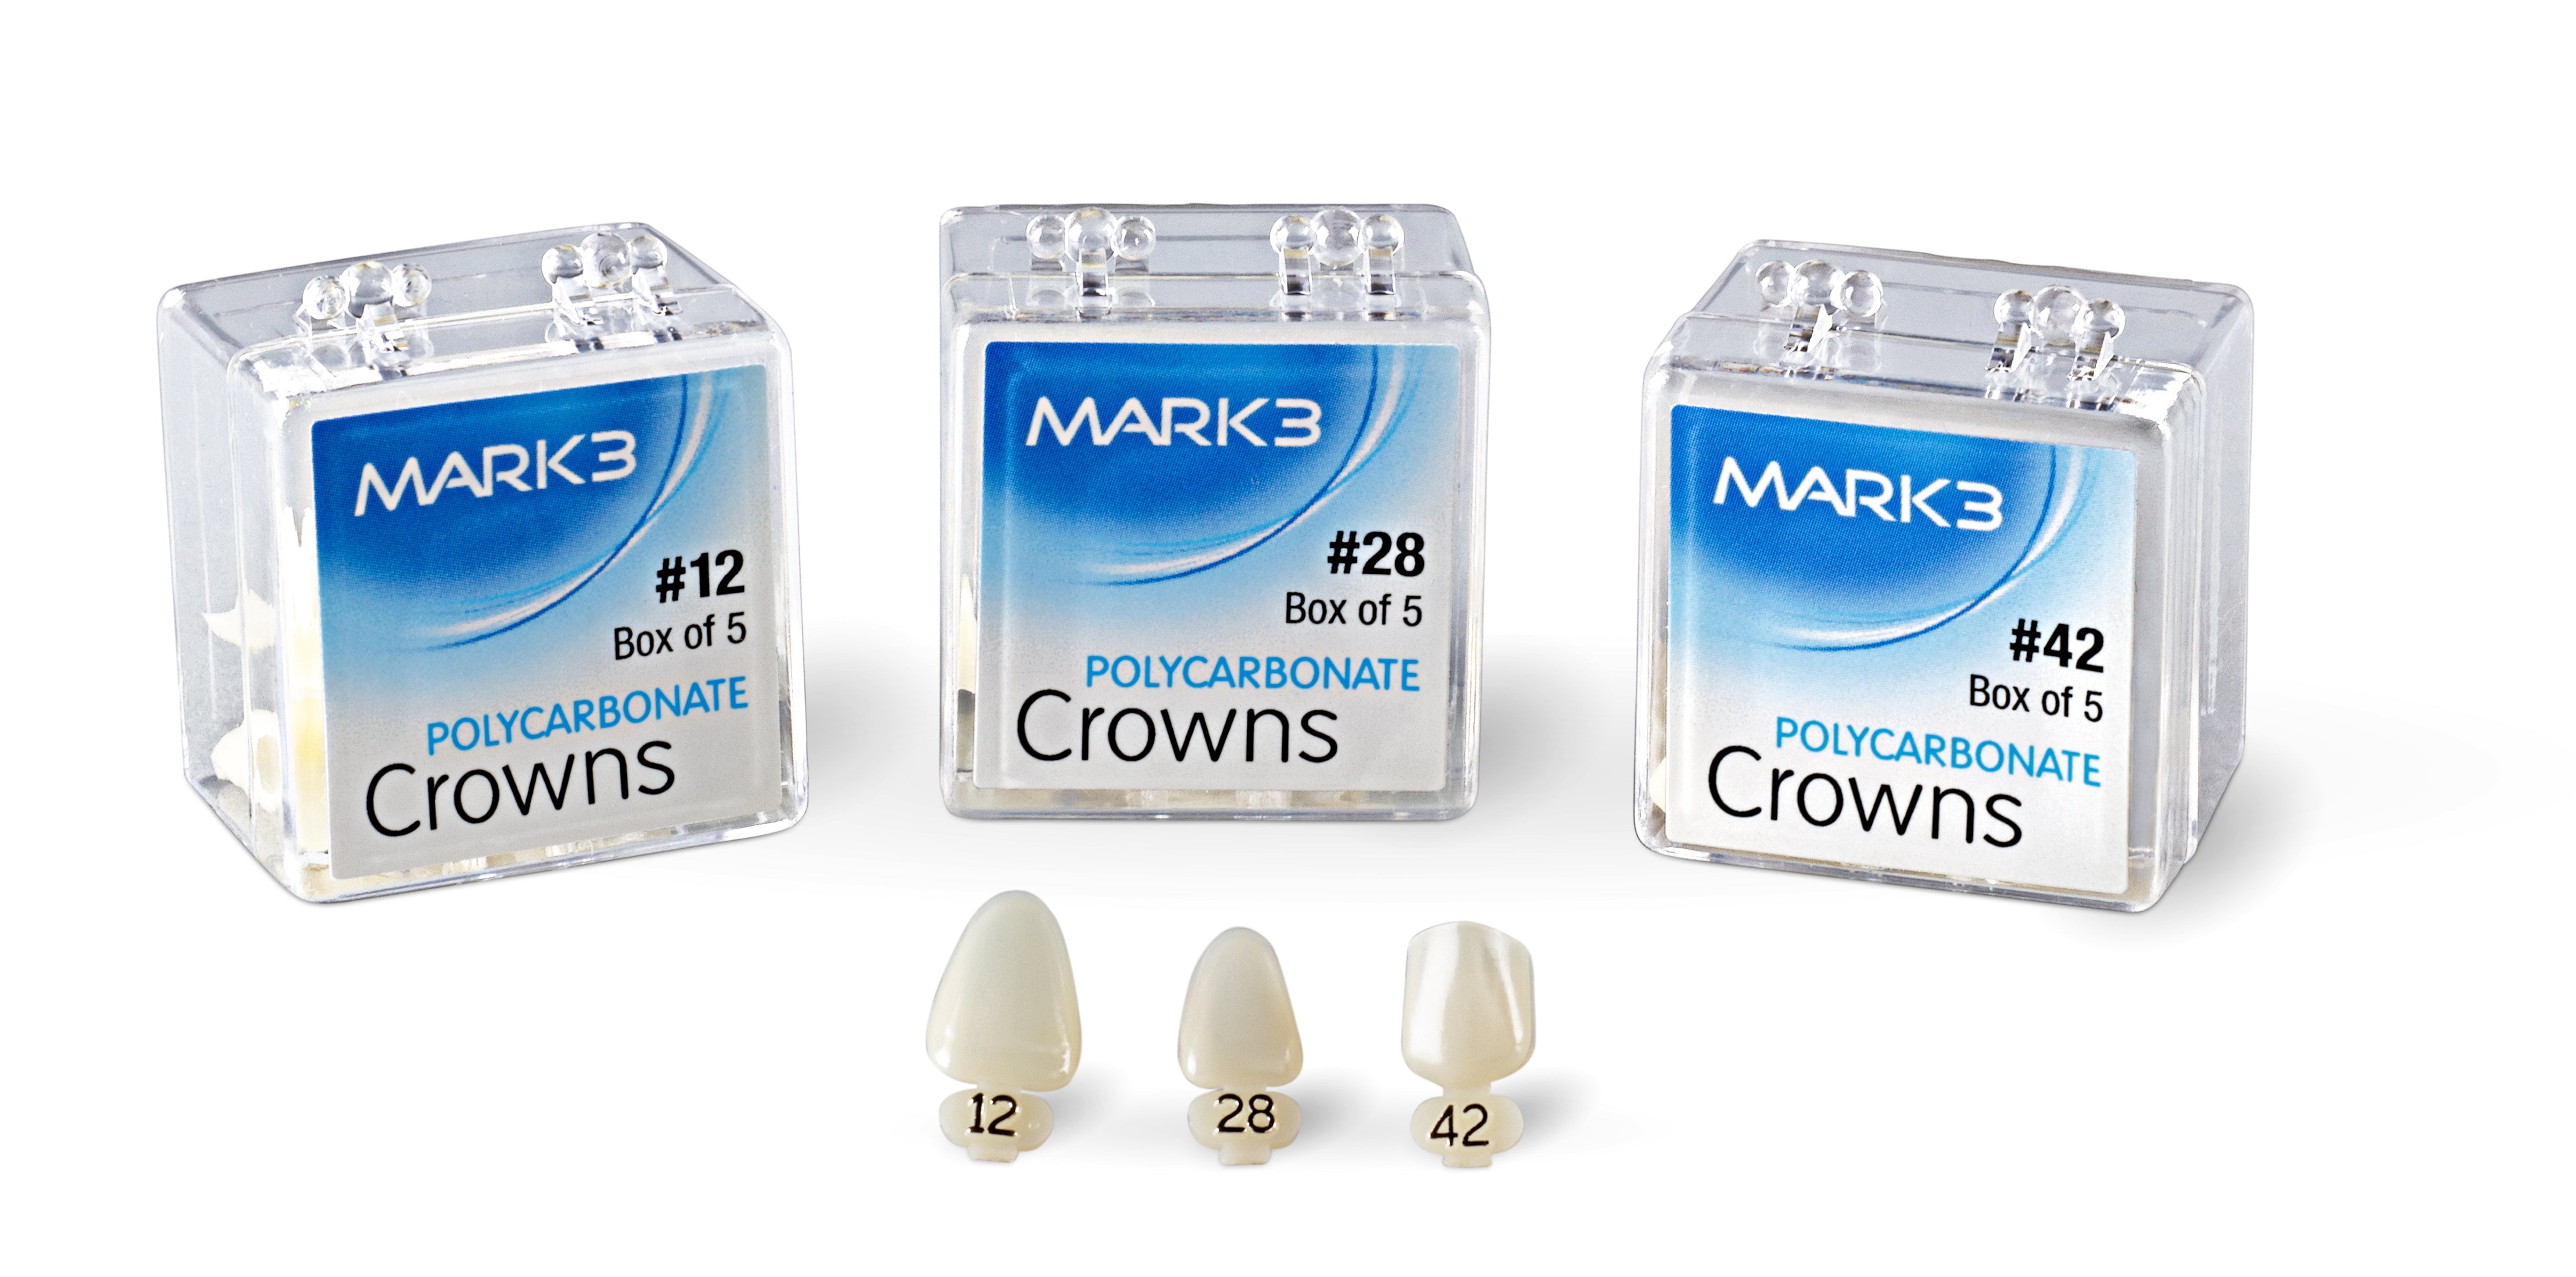 Polycarbonate Crowns 5/pk - MARK3